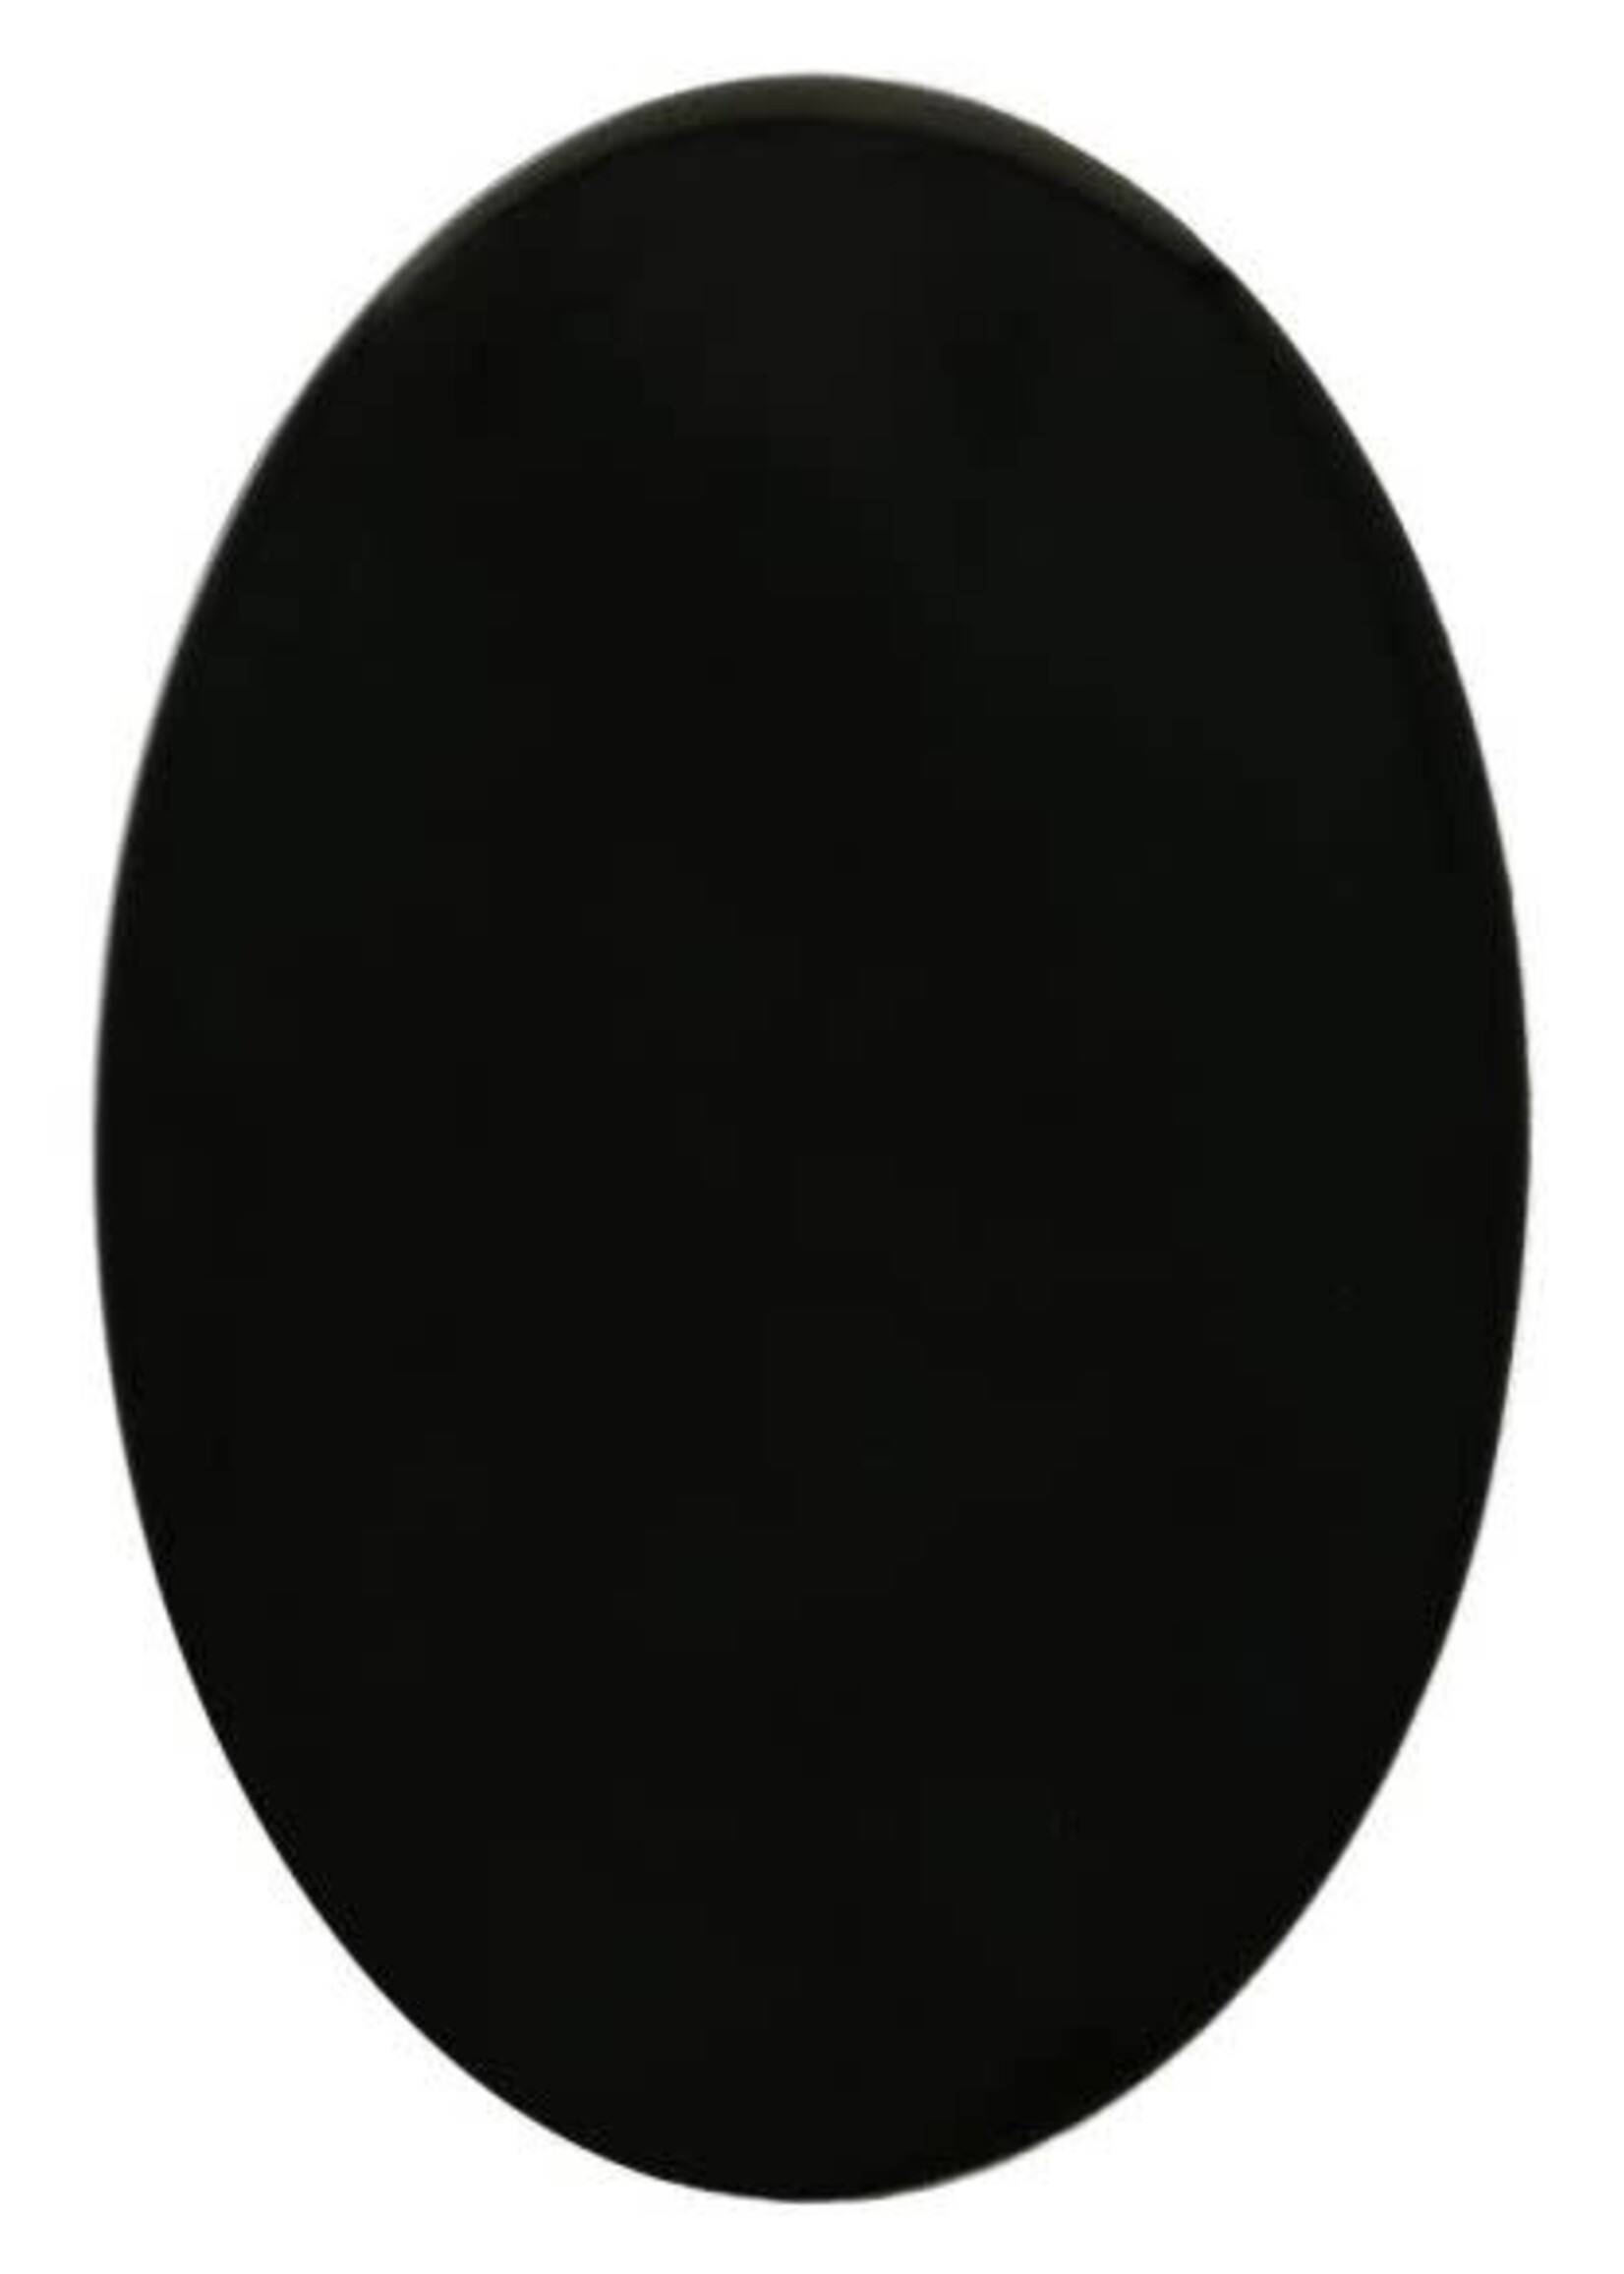 Dierenogen ovaal zwart 11mm